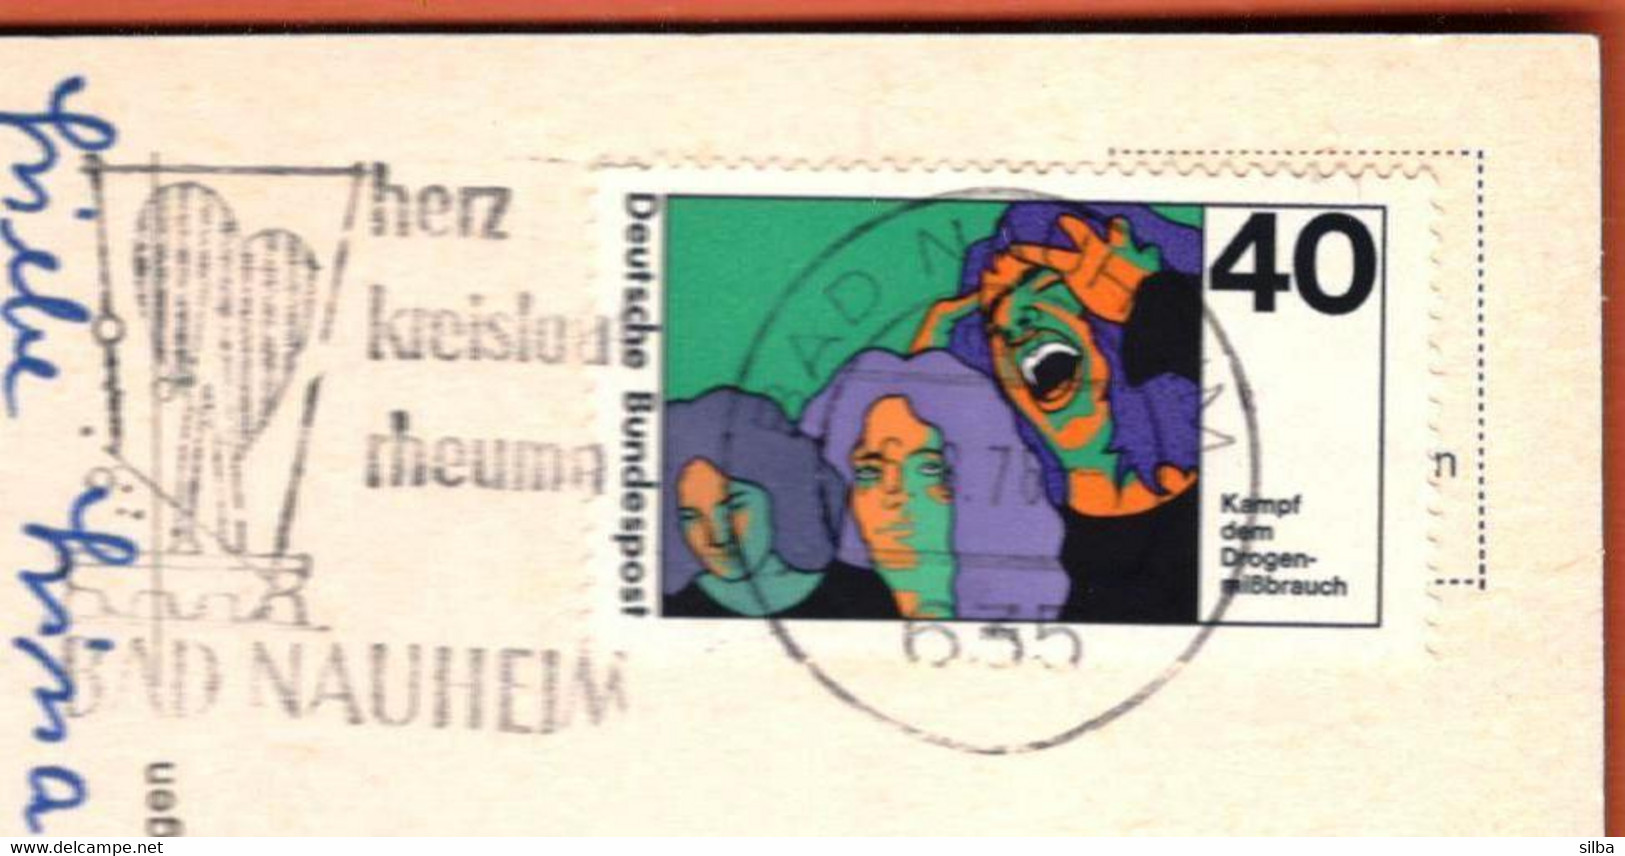 Germany Bad Nauheim 1976 / Herz, Kreislauf, Rheuma, Heart, Circulation, Rheumatism / Health / Machine Stamp ATM - Hydrotherapy